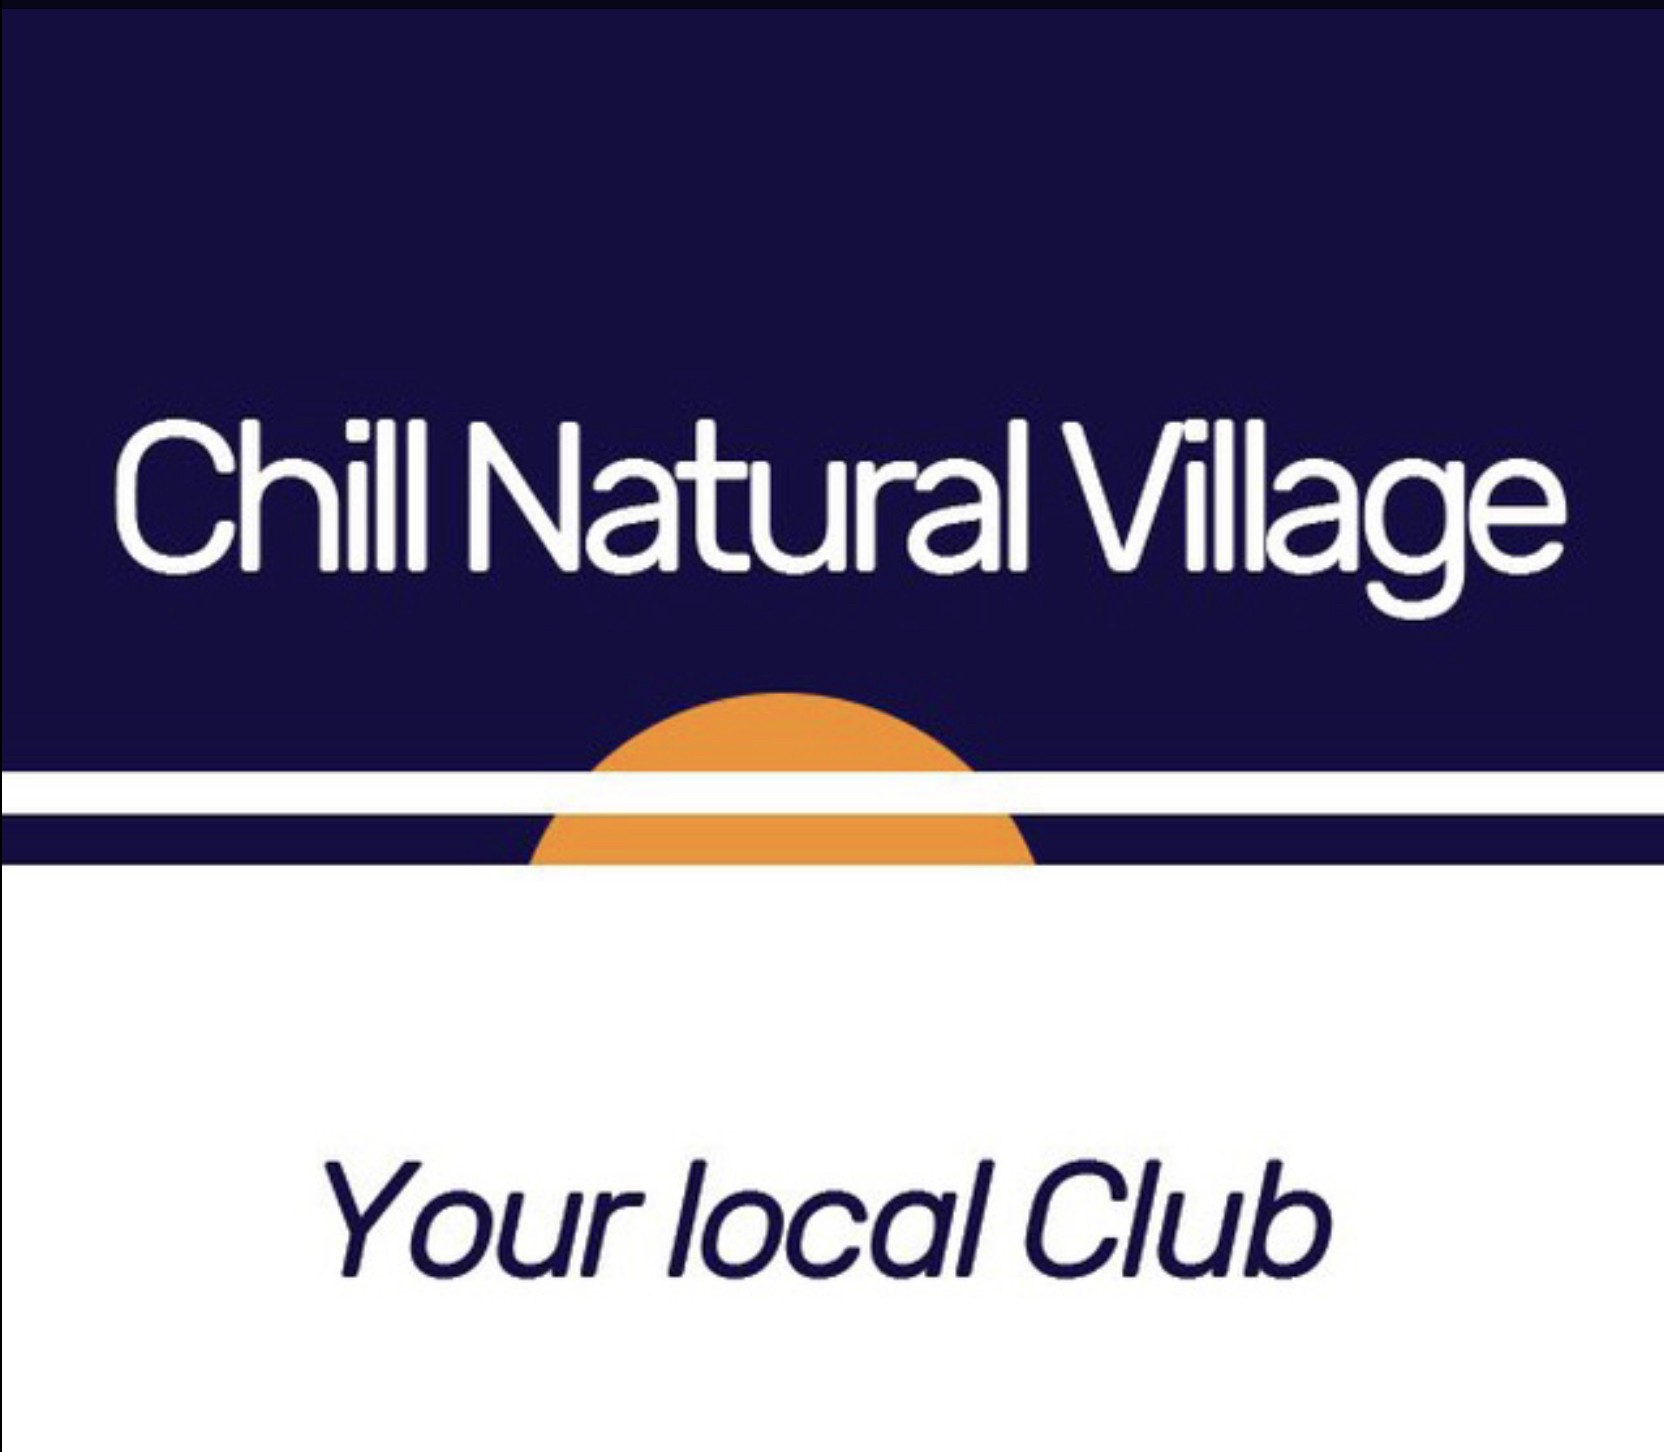 Chill Natural Village